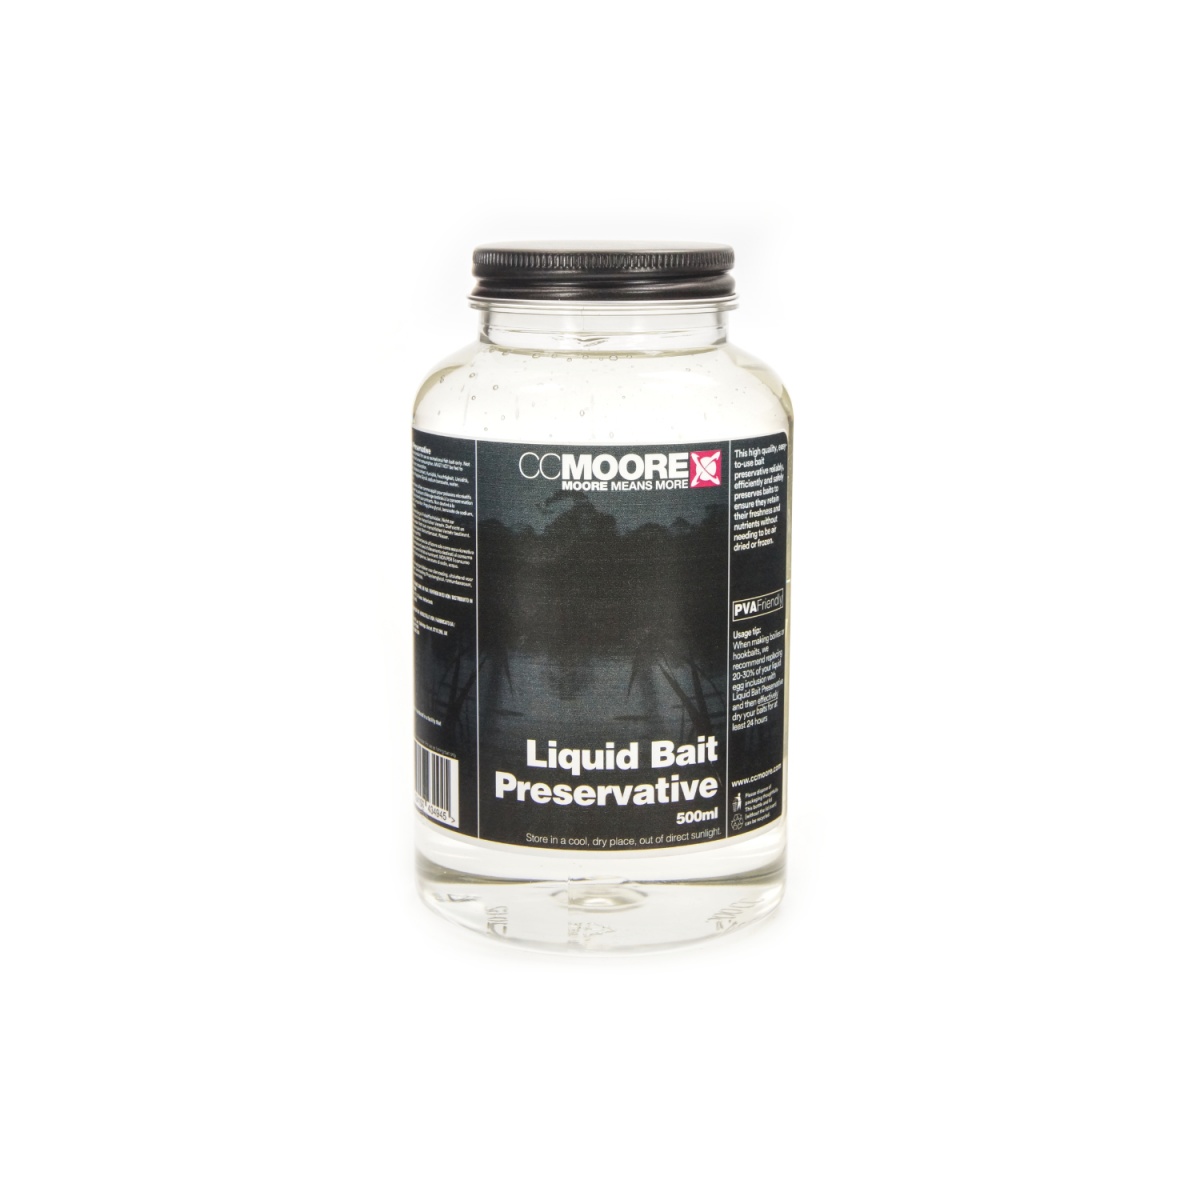 NEW CcMoore Liquid Bait Preservative 500 ml opakowanie